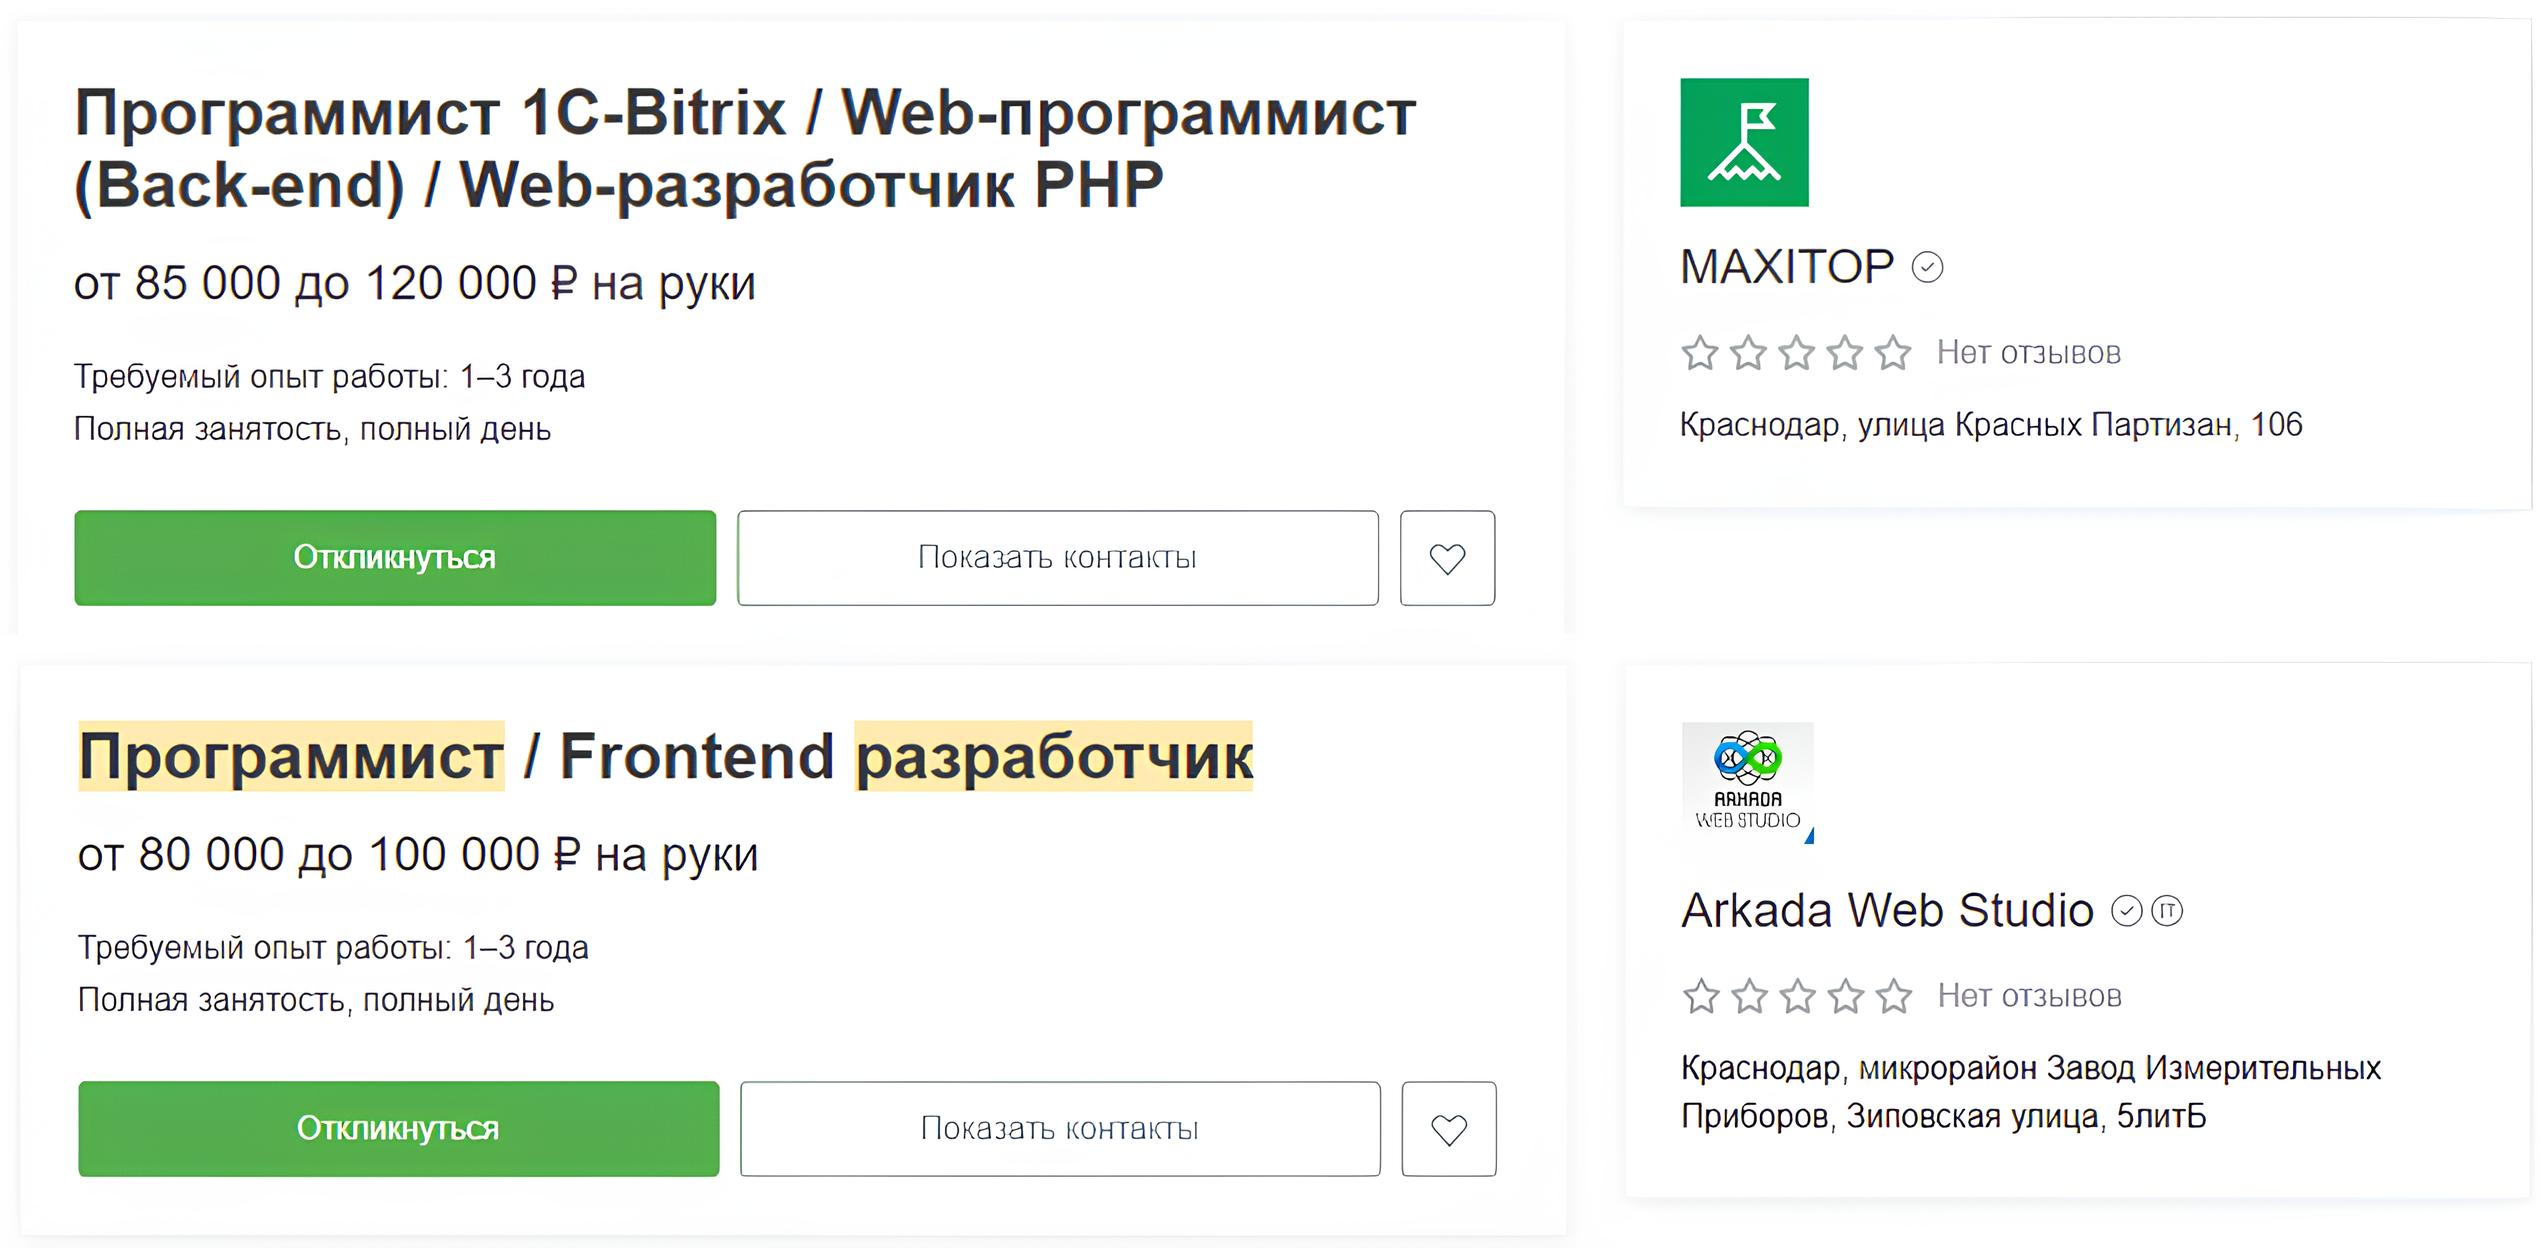 Пример вакансий веб-разработчика уровня Middle в Краснодаре